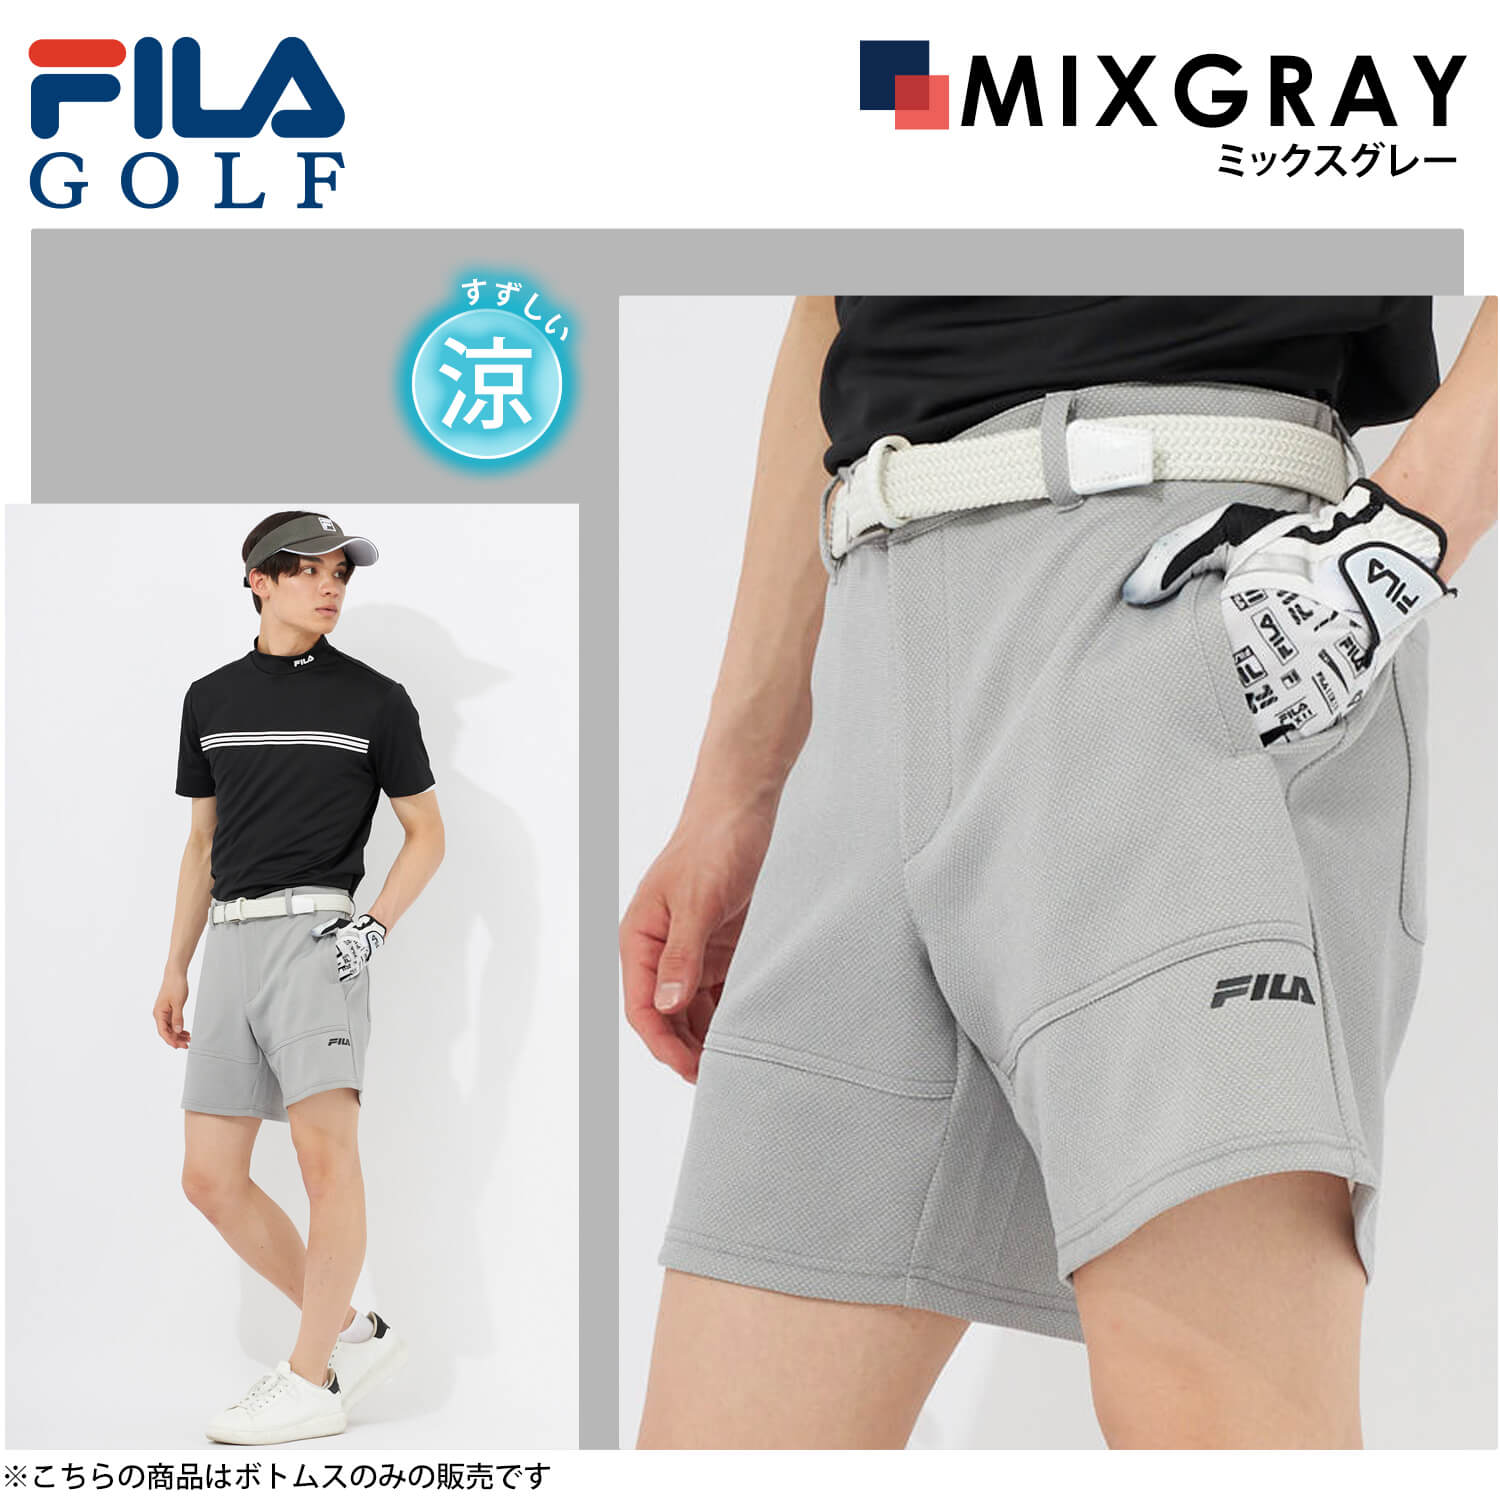 FILA GOLF フィラゴルフ ショートパンツ メンズ ゴルフウェア 吸汗速乾 ドライ UVカット...